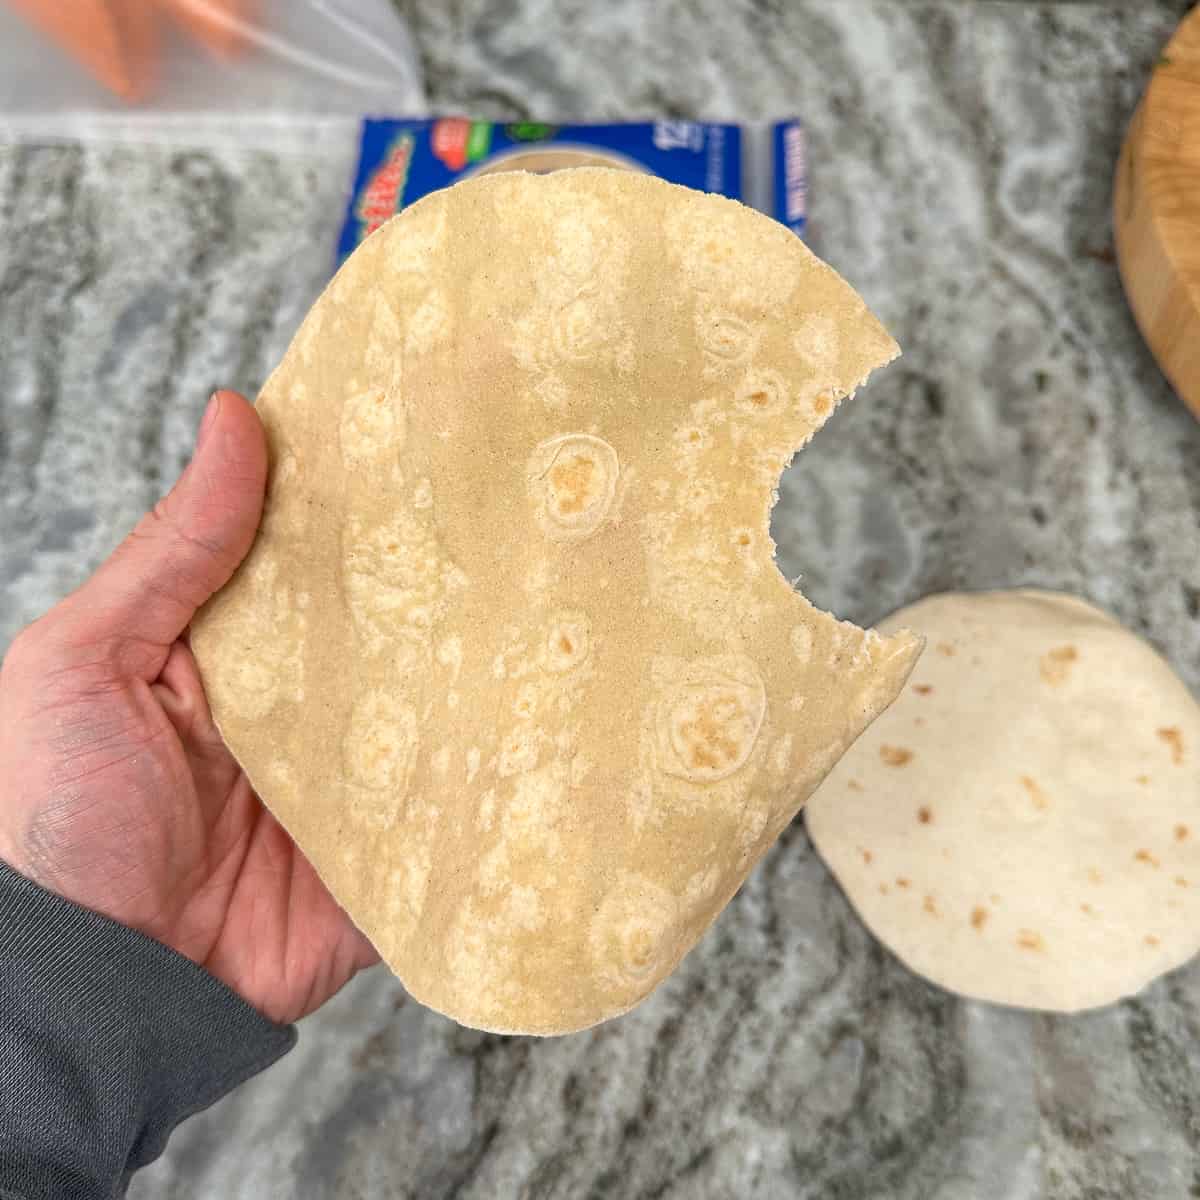 Bite of tortilla